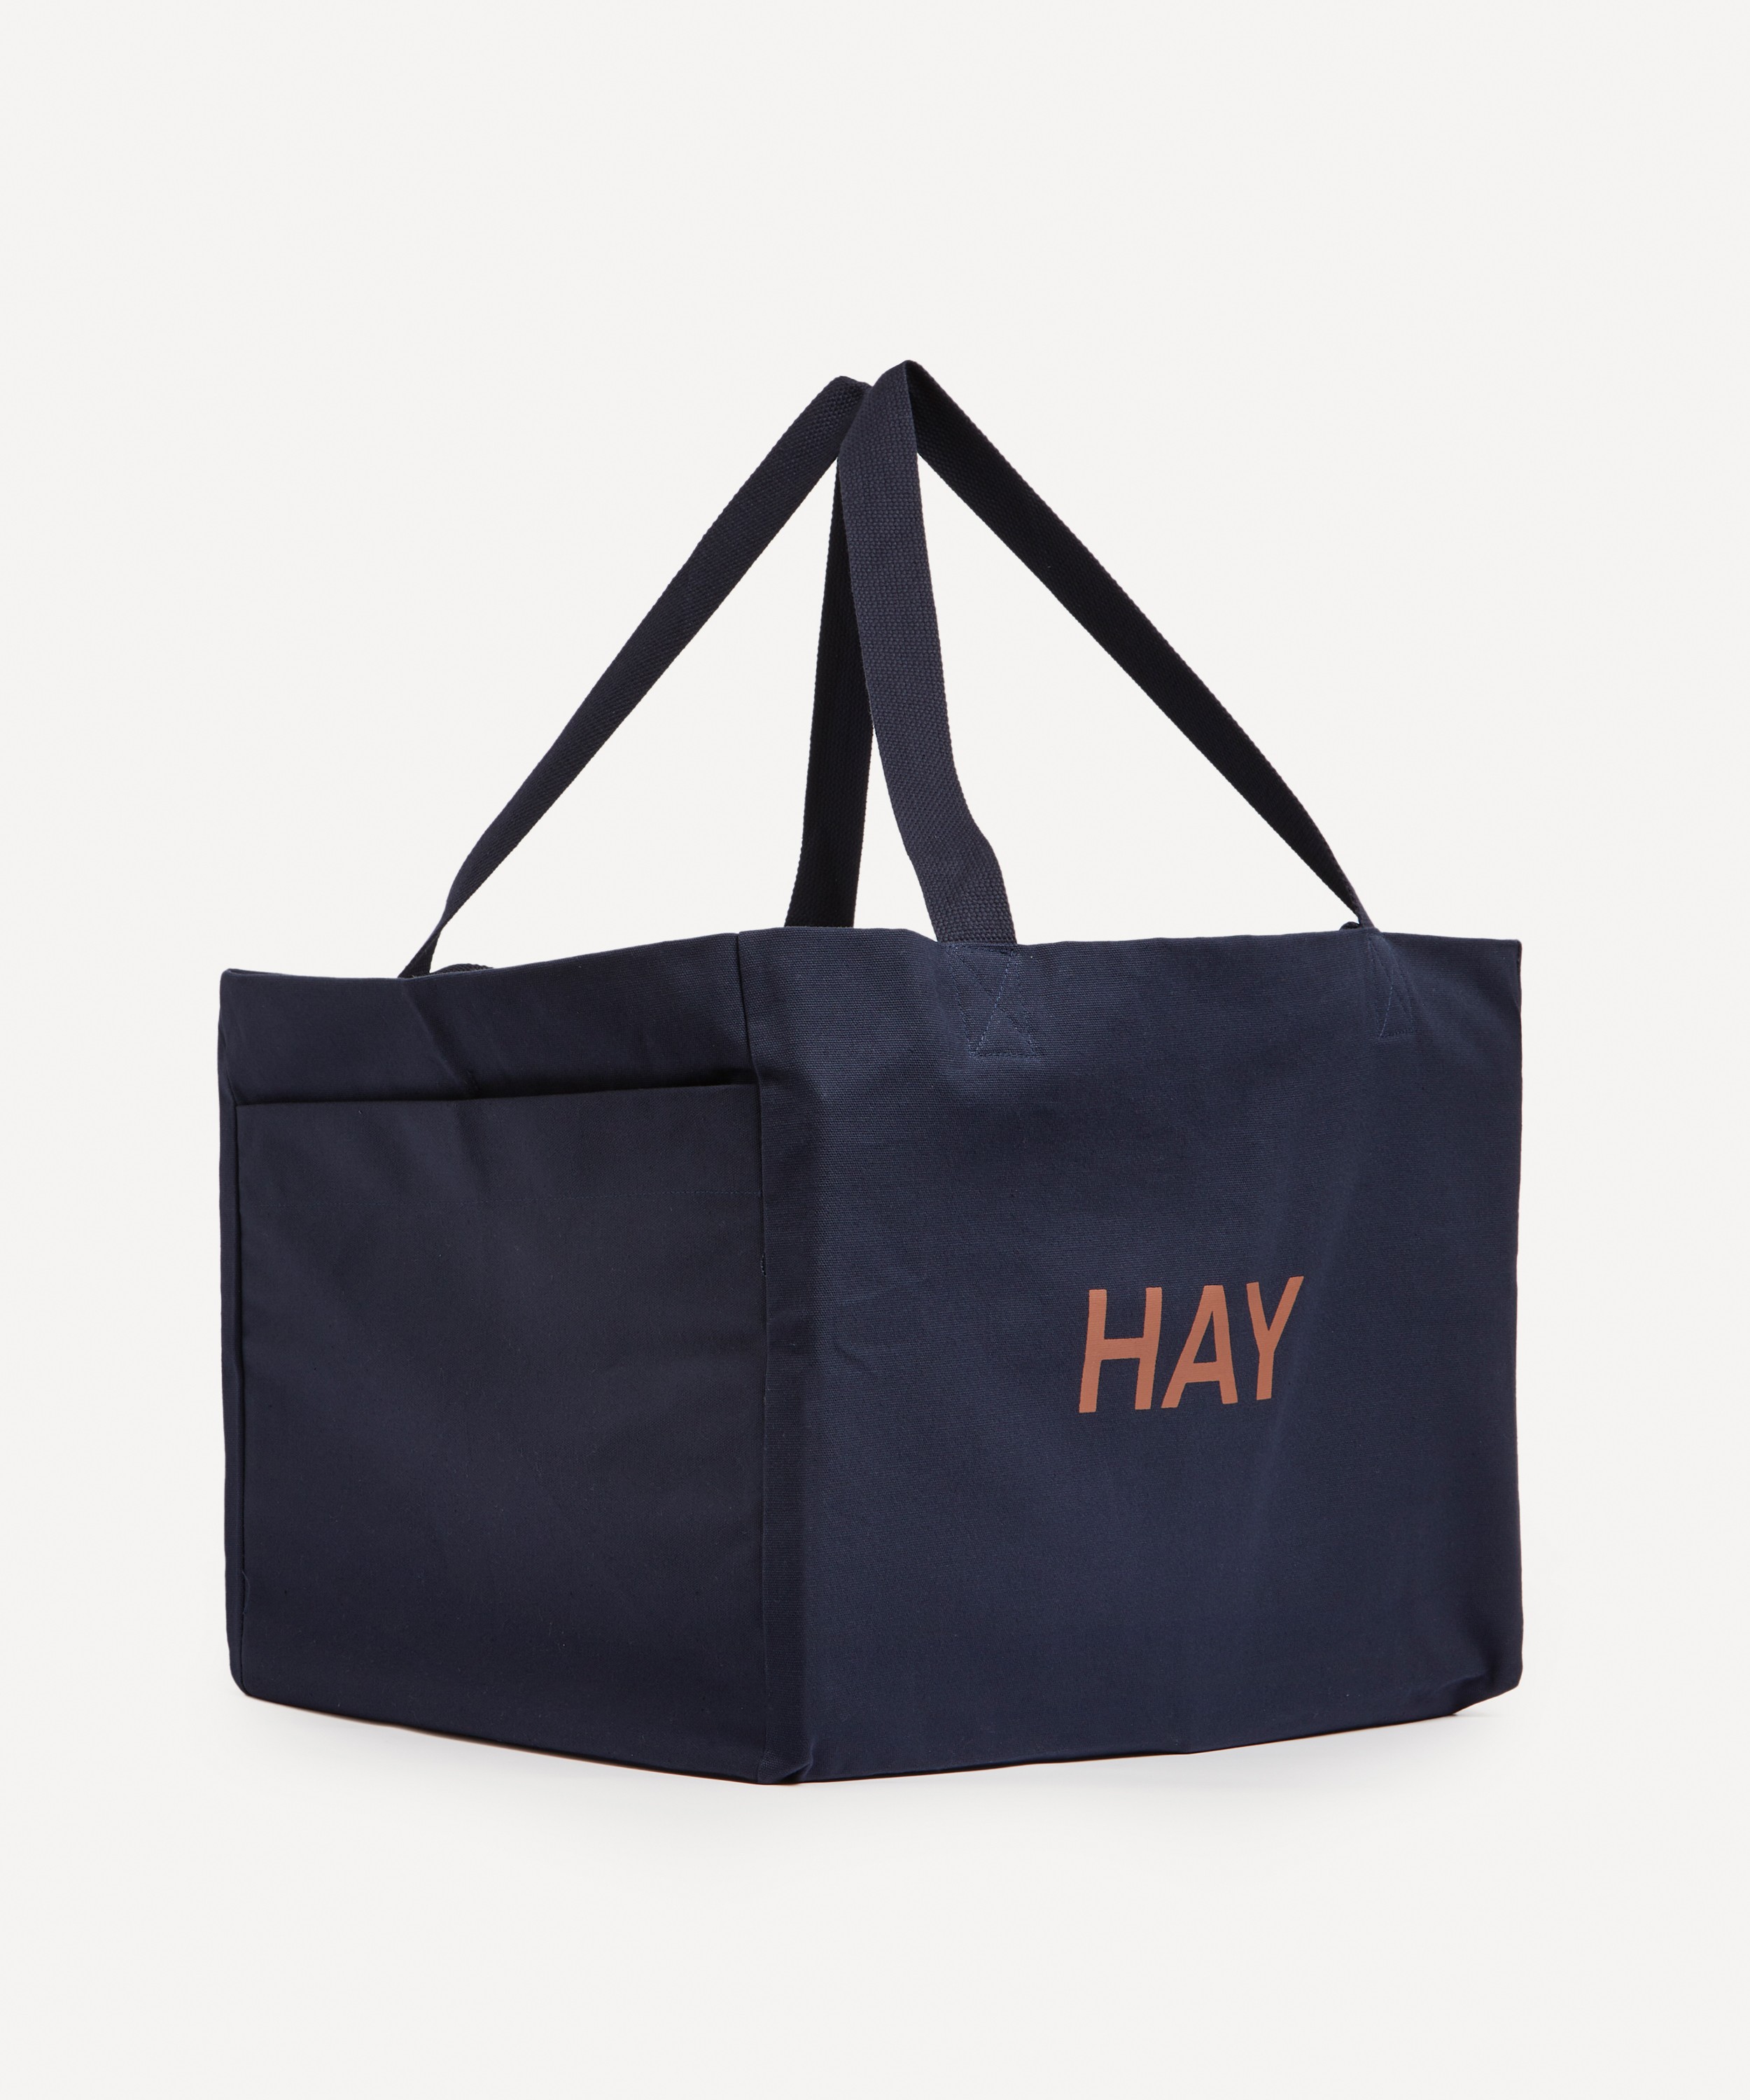 Hay Weekend Bag No. 2 | Liberty